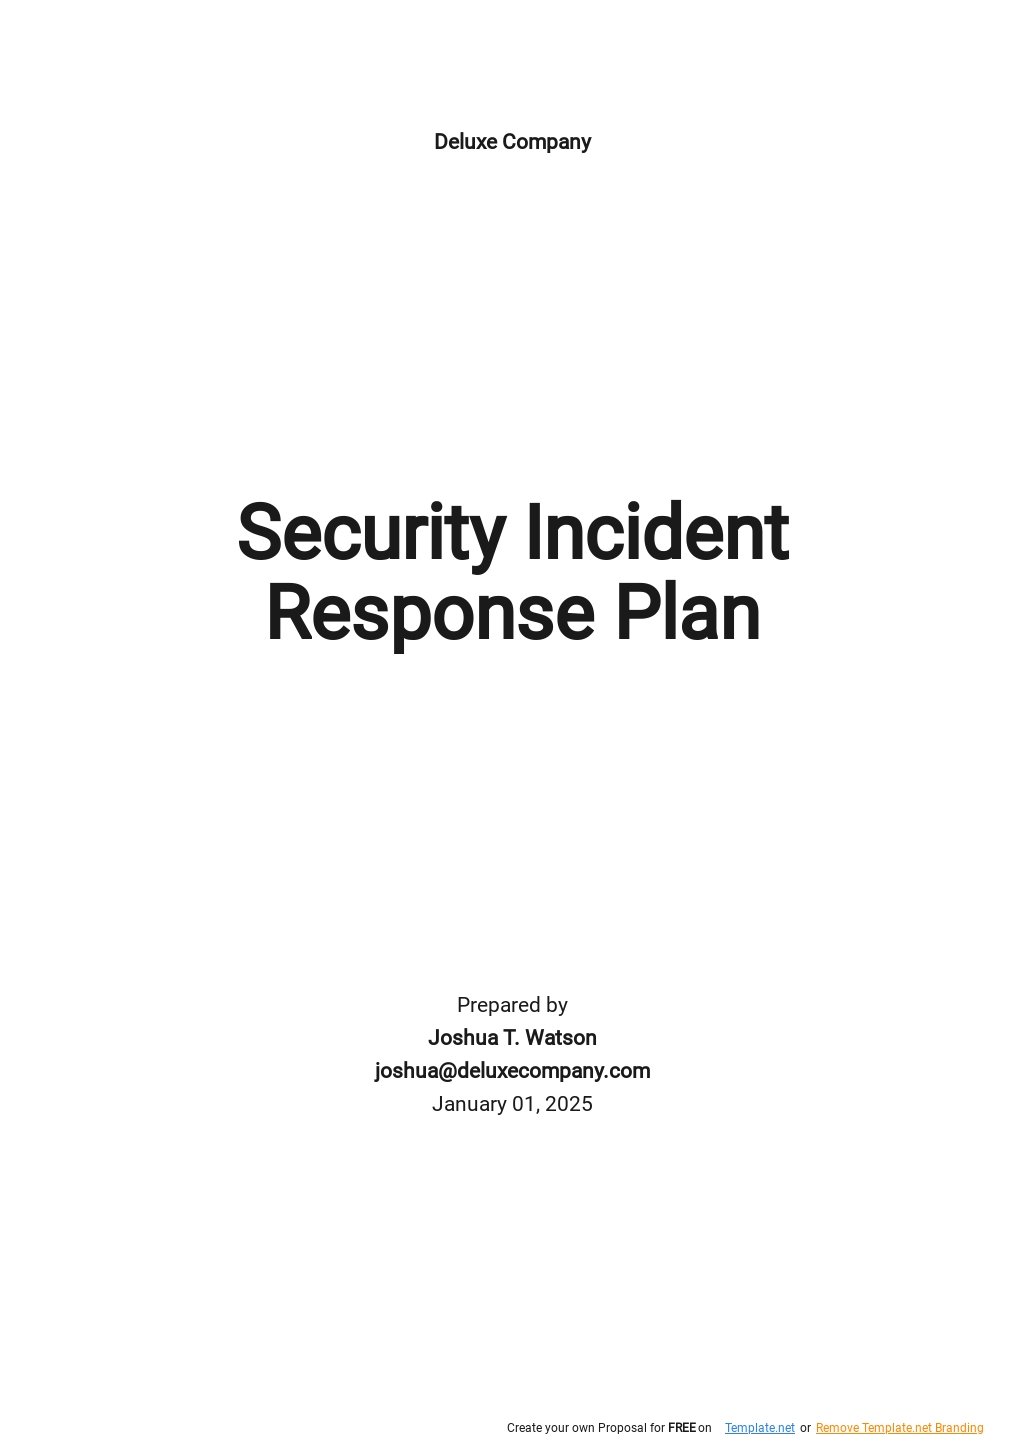 Security Incident Response Plan Template